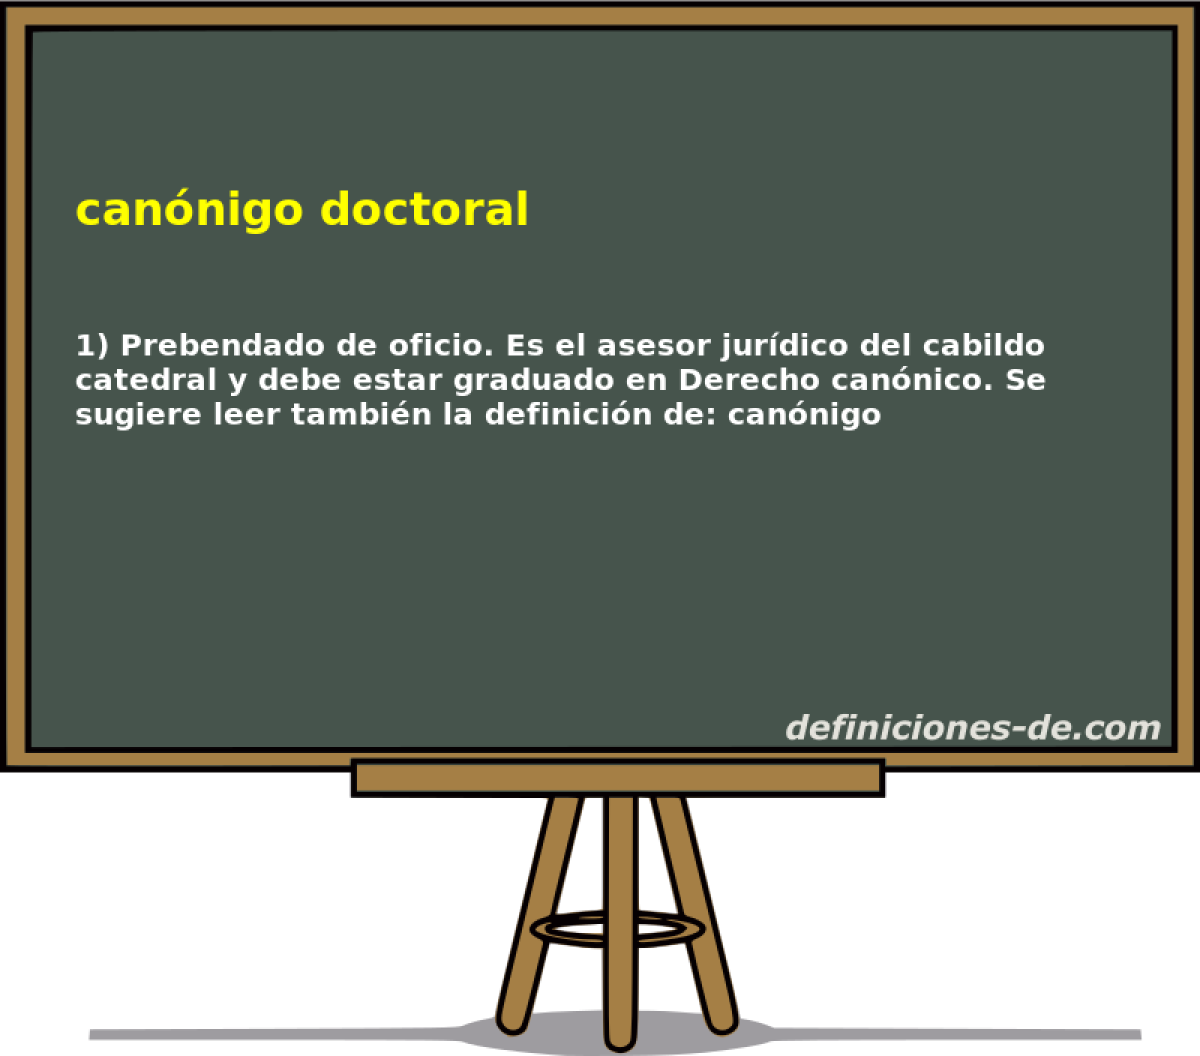 cannigo doctoral 